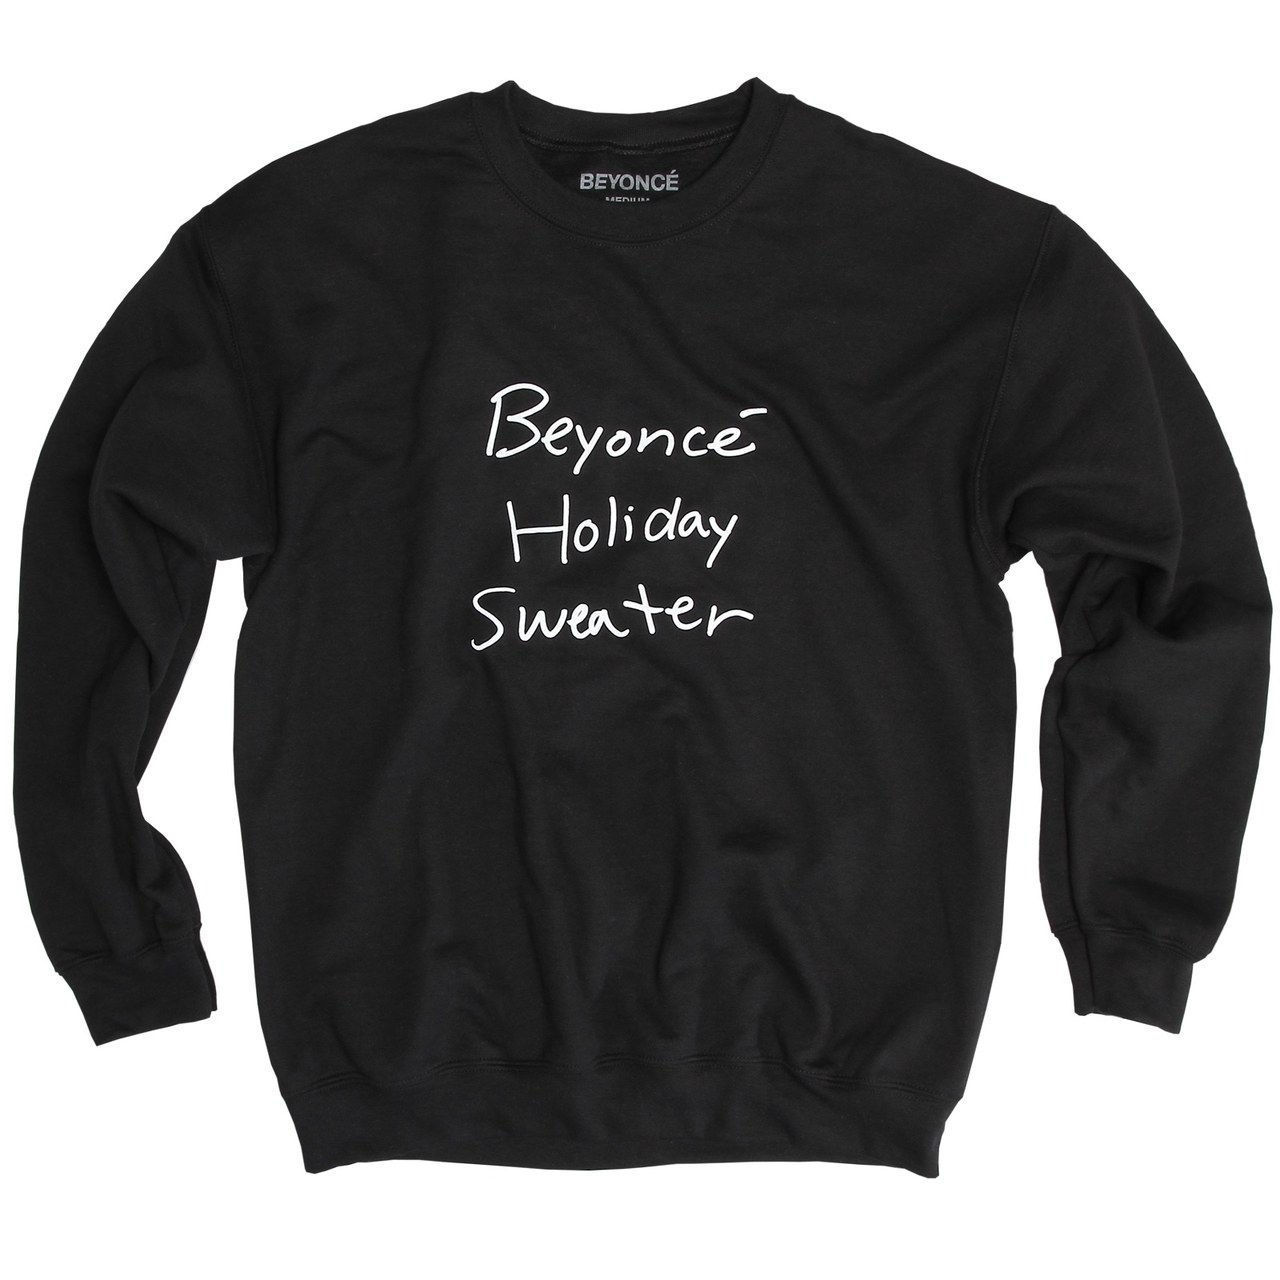 Beyoncé Holiday Sweatshirt Black, $55, [Beyonce.com](https://shop.beyonce.com/products/62188-beyonce-holiday-sweatshirt-black)